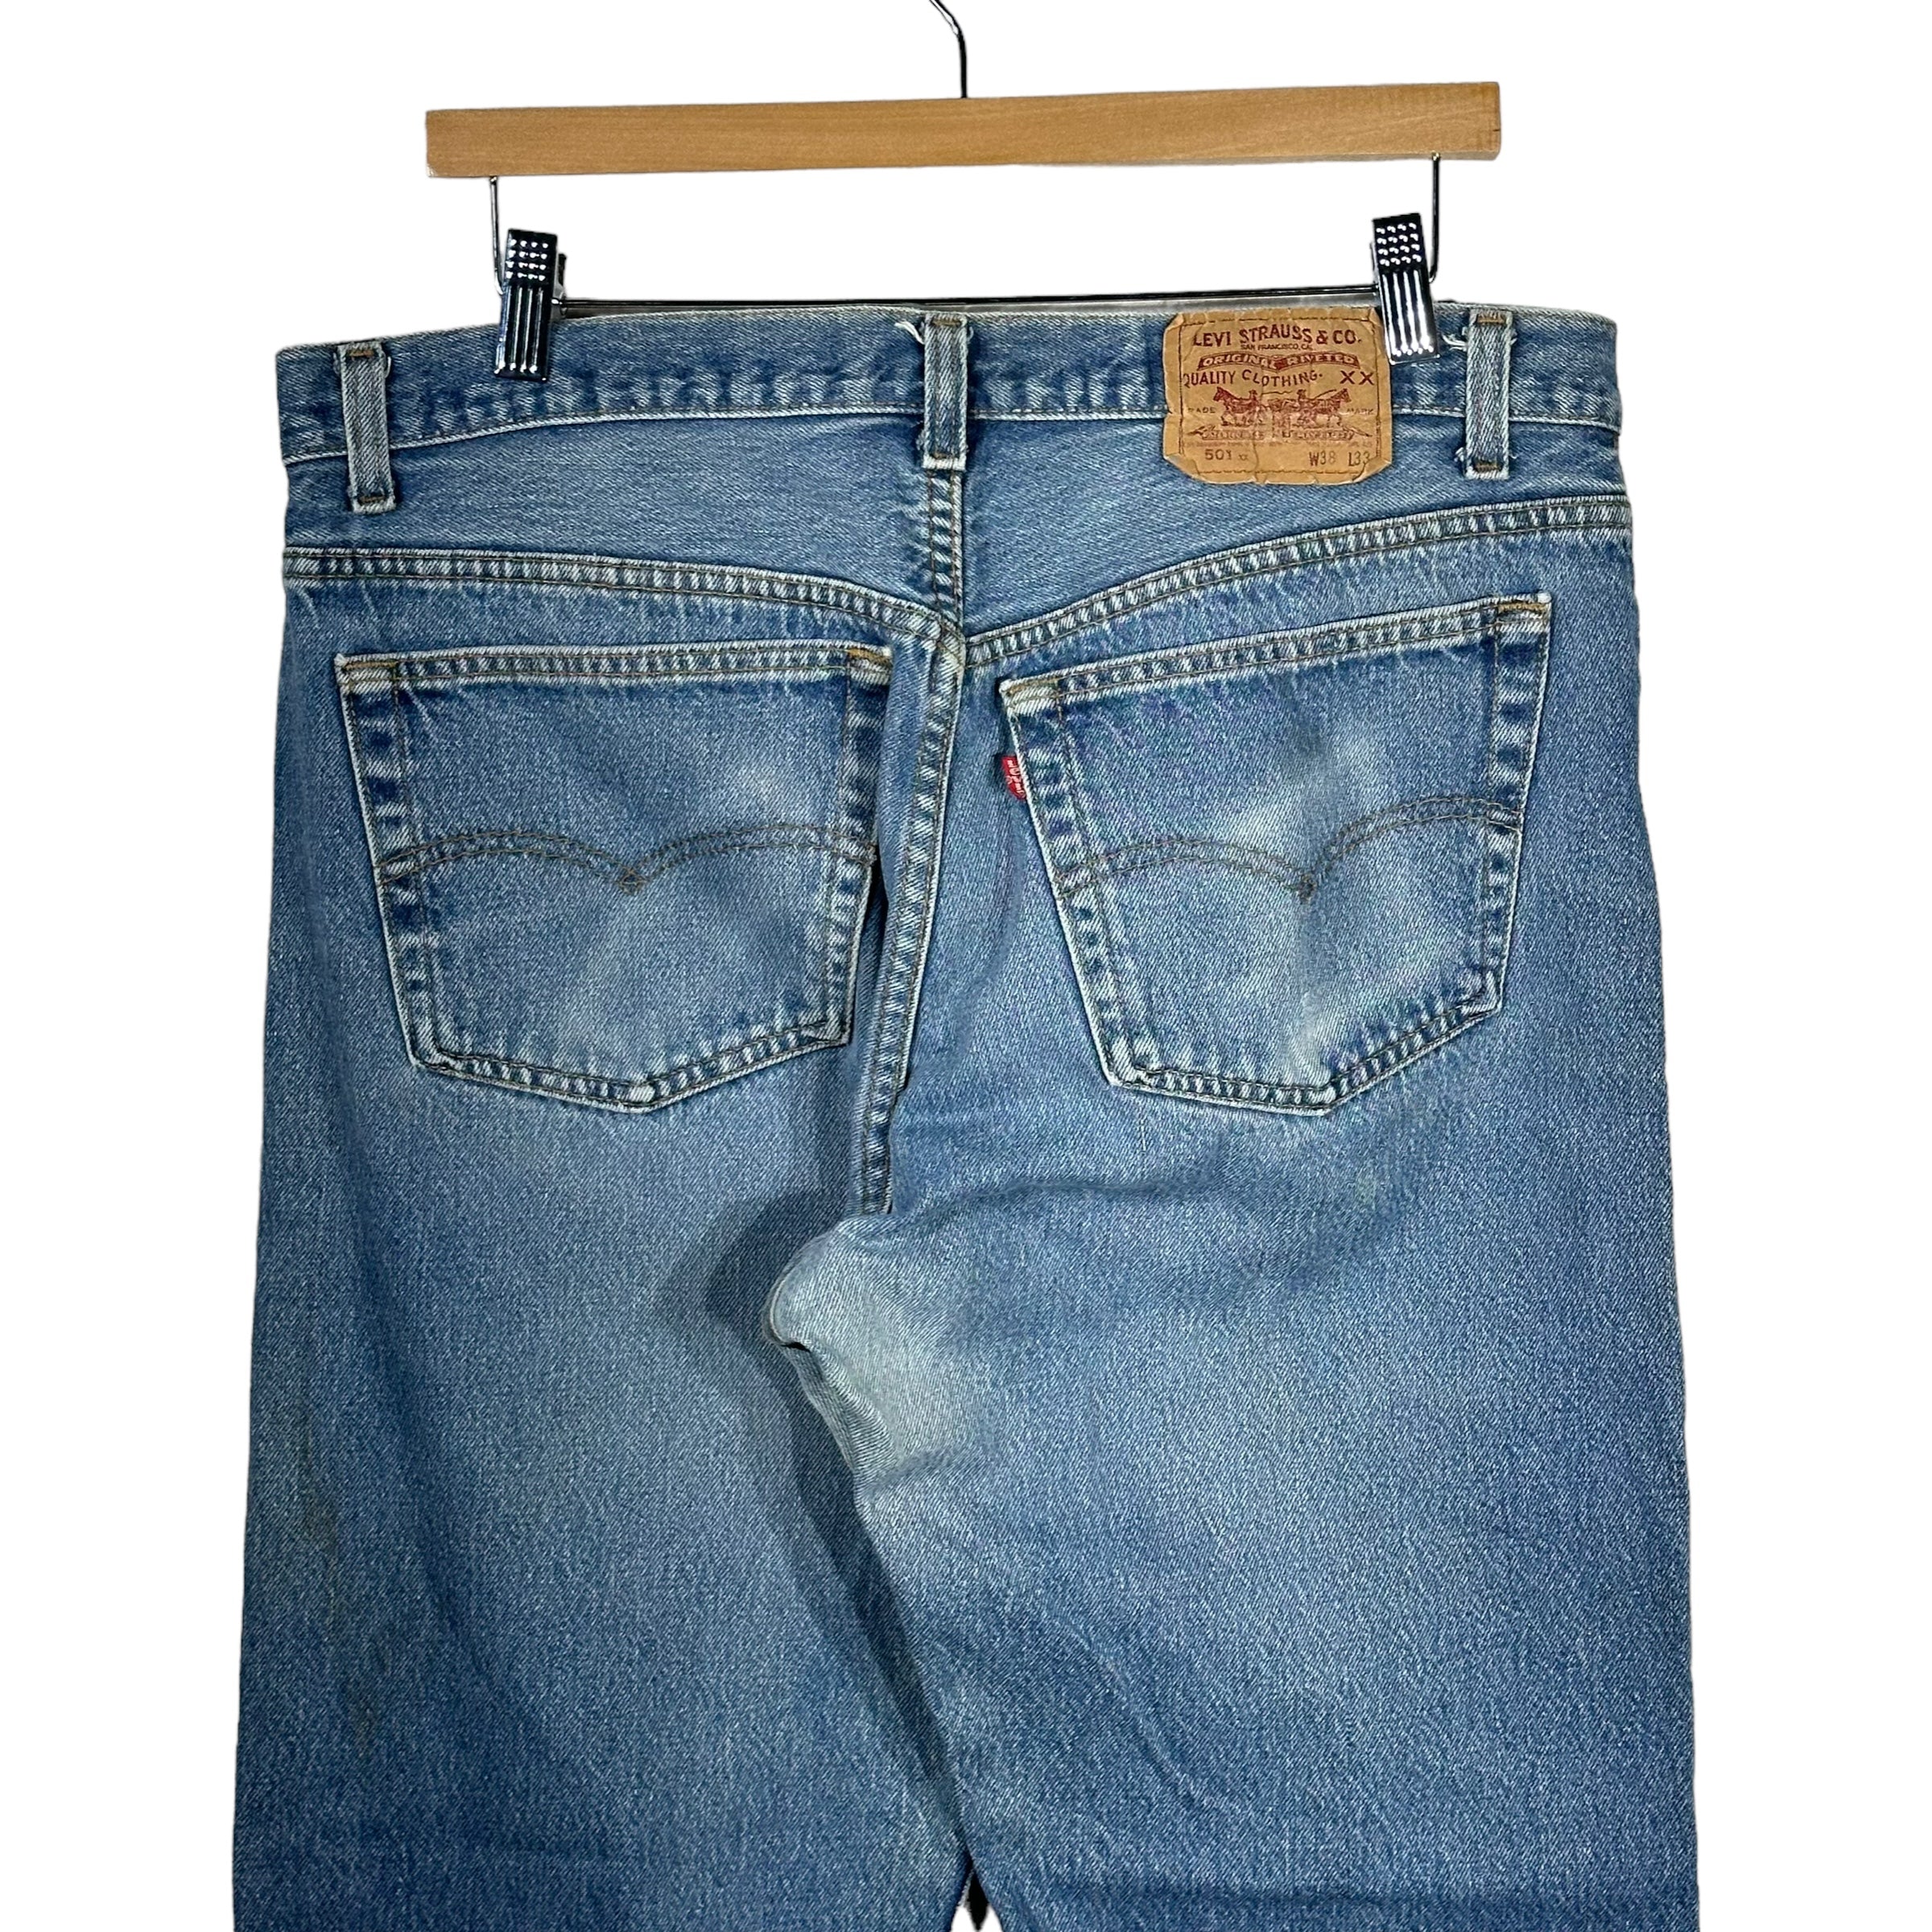 Vintage Levi's 501 Distressed Jeans